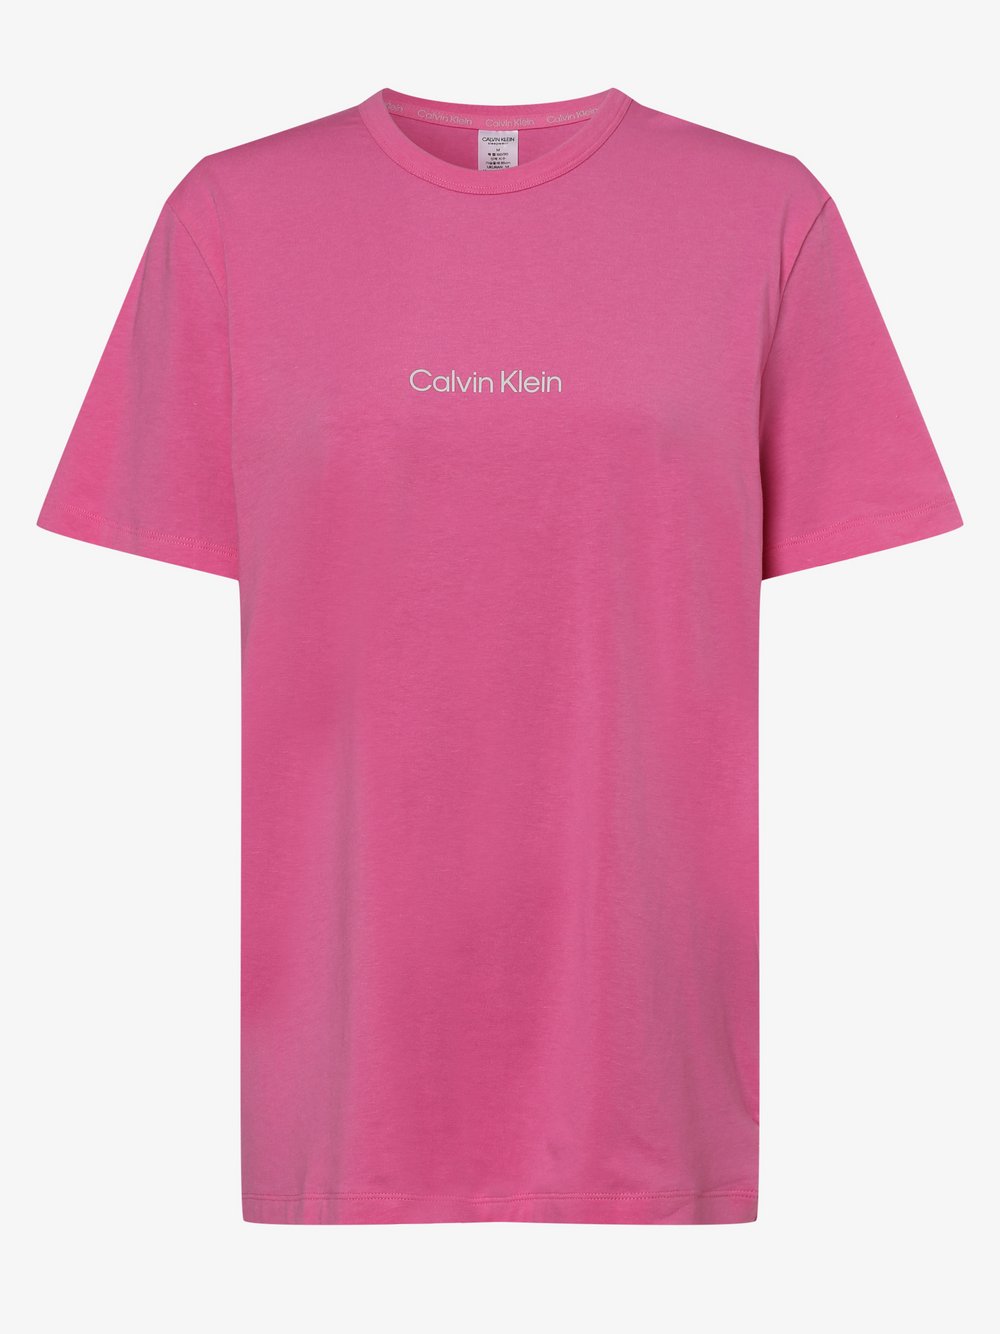 Calvin Klein - Damska koszulka od piżamy, wyrazisty róż